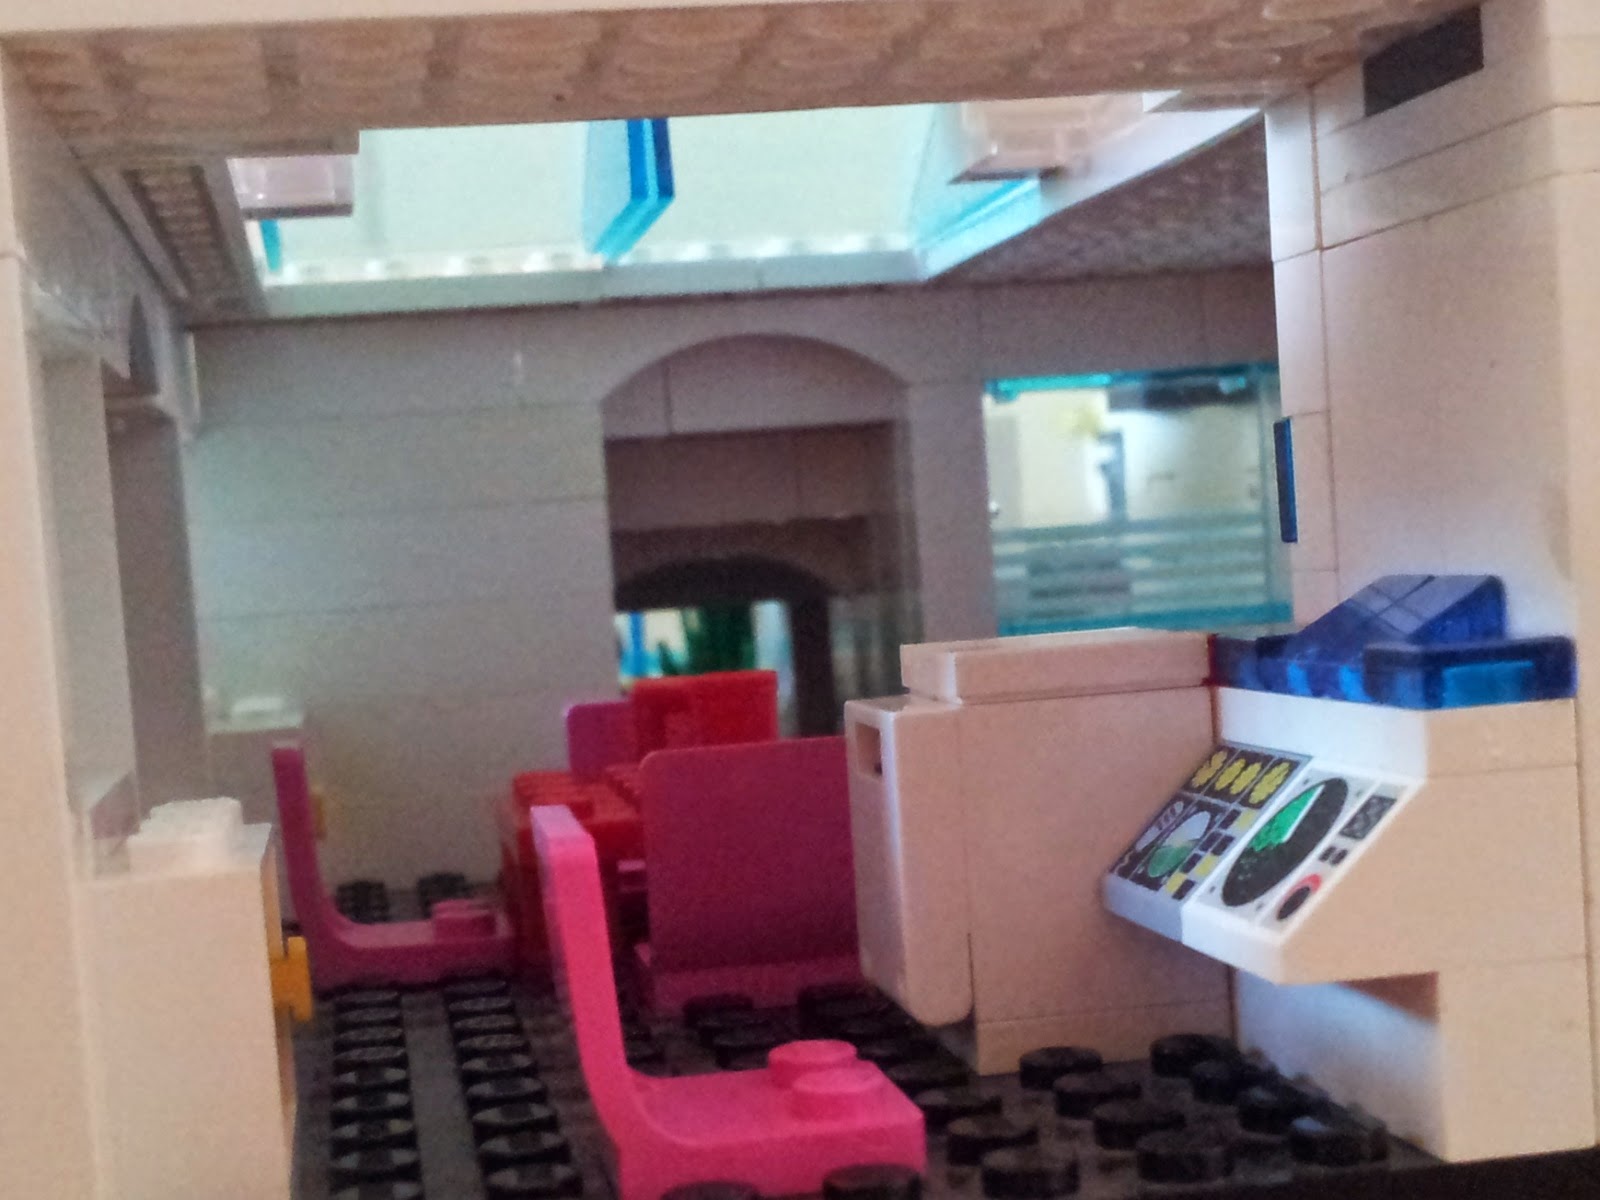 LEGO Mars base interior